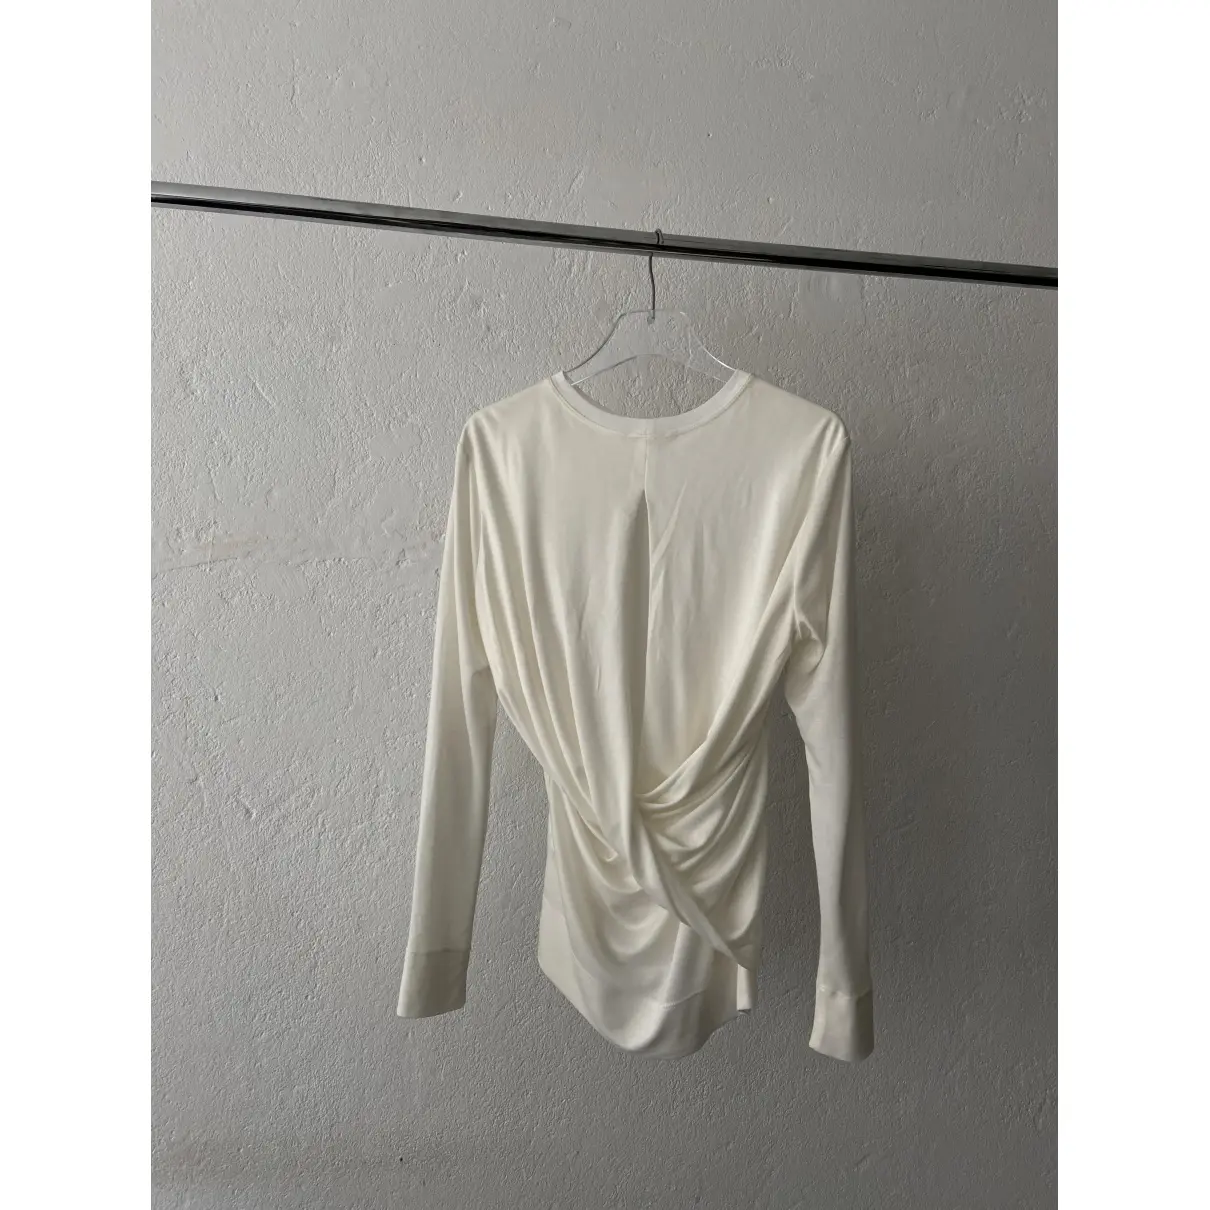 Buy Helmut Lang Silk blouse online